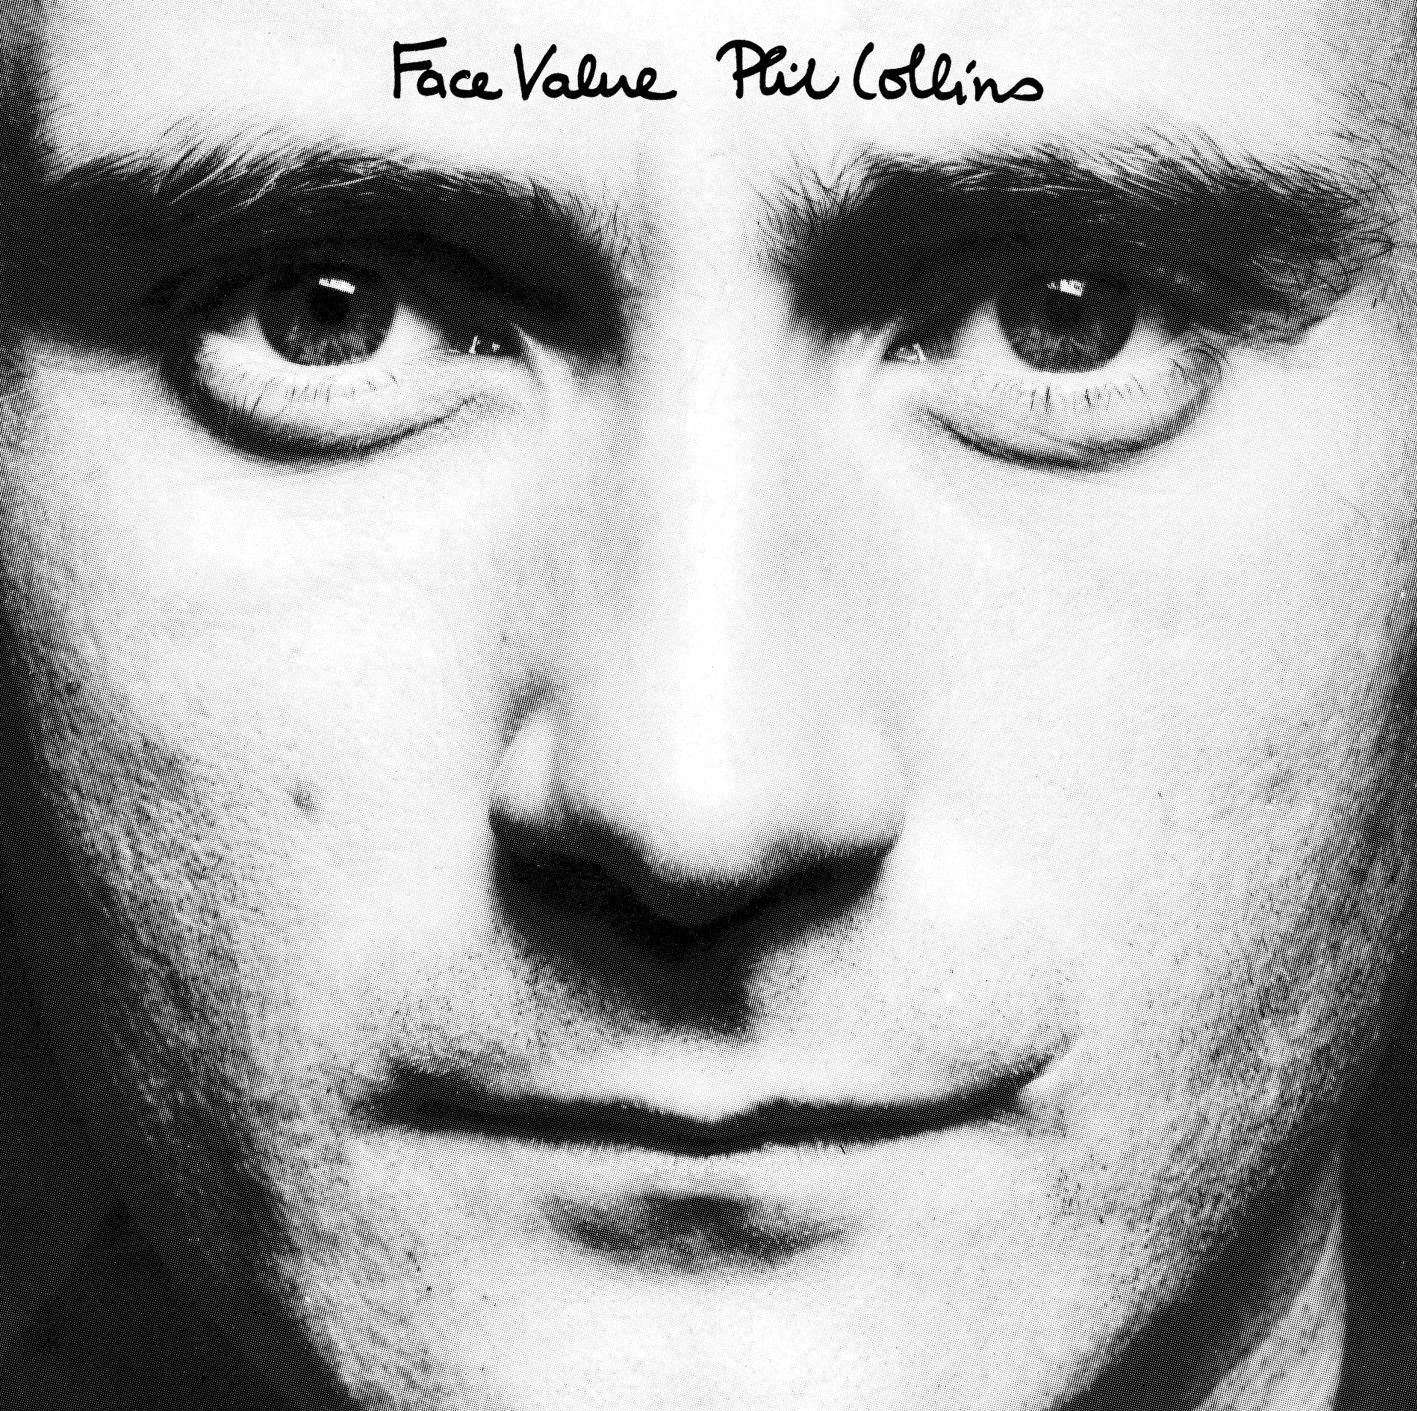 Phil Collins - Cifra Club